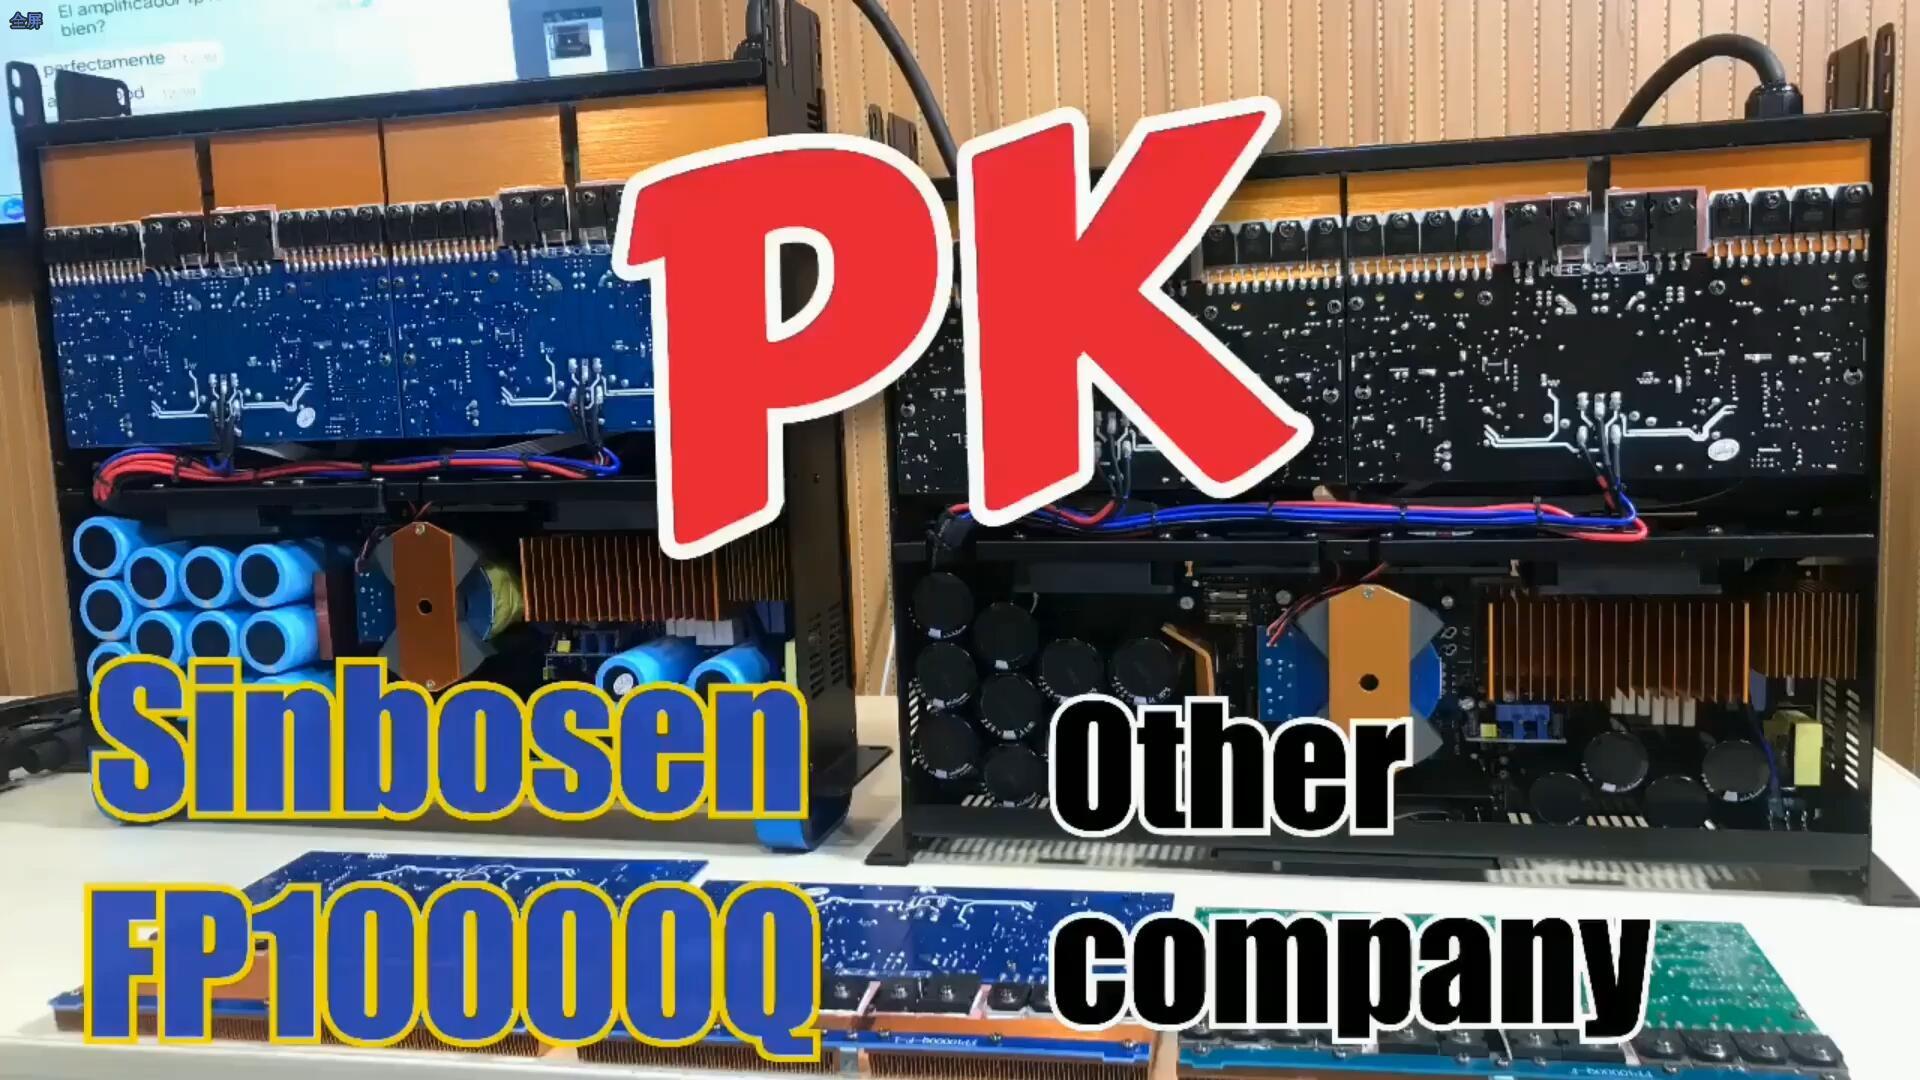 Sinbosen FP10000Q PK inna firma